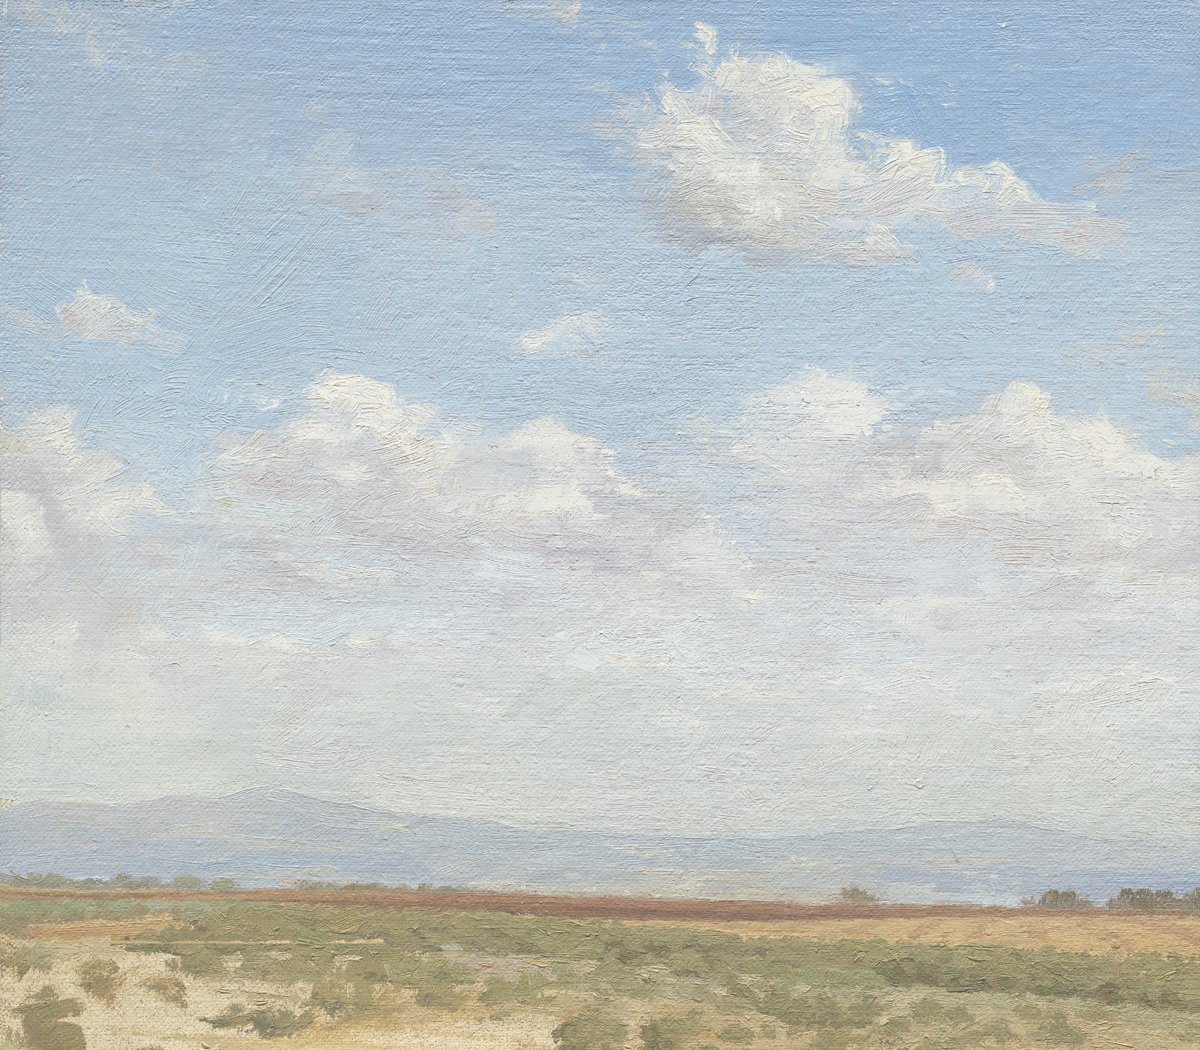  Oil on Canvas, 25x22 cm, 2017 